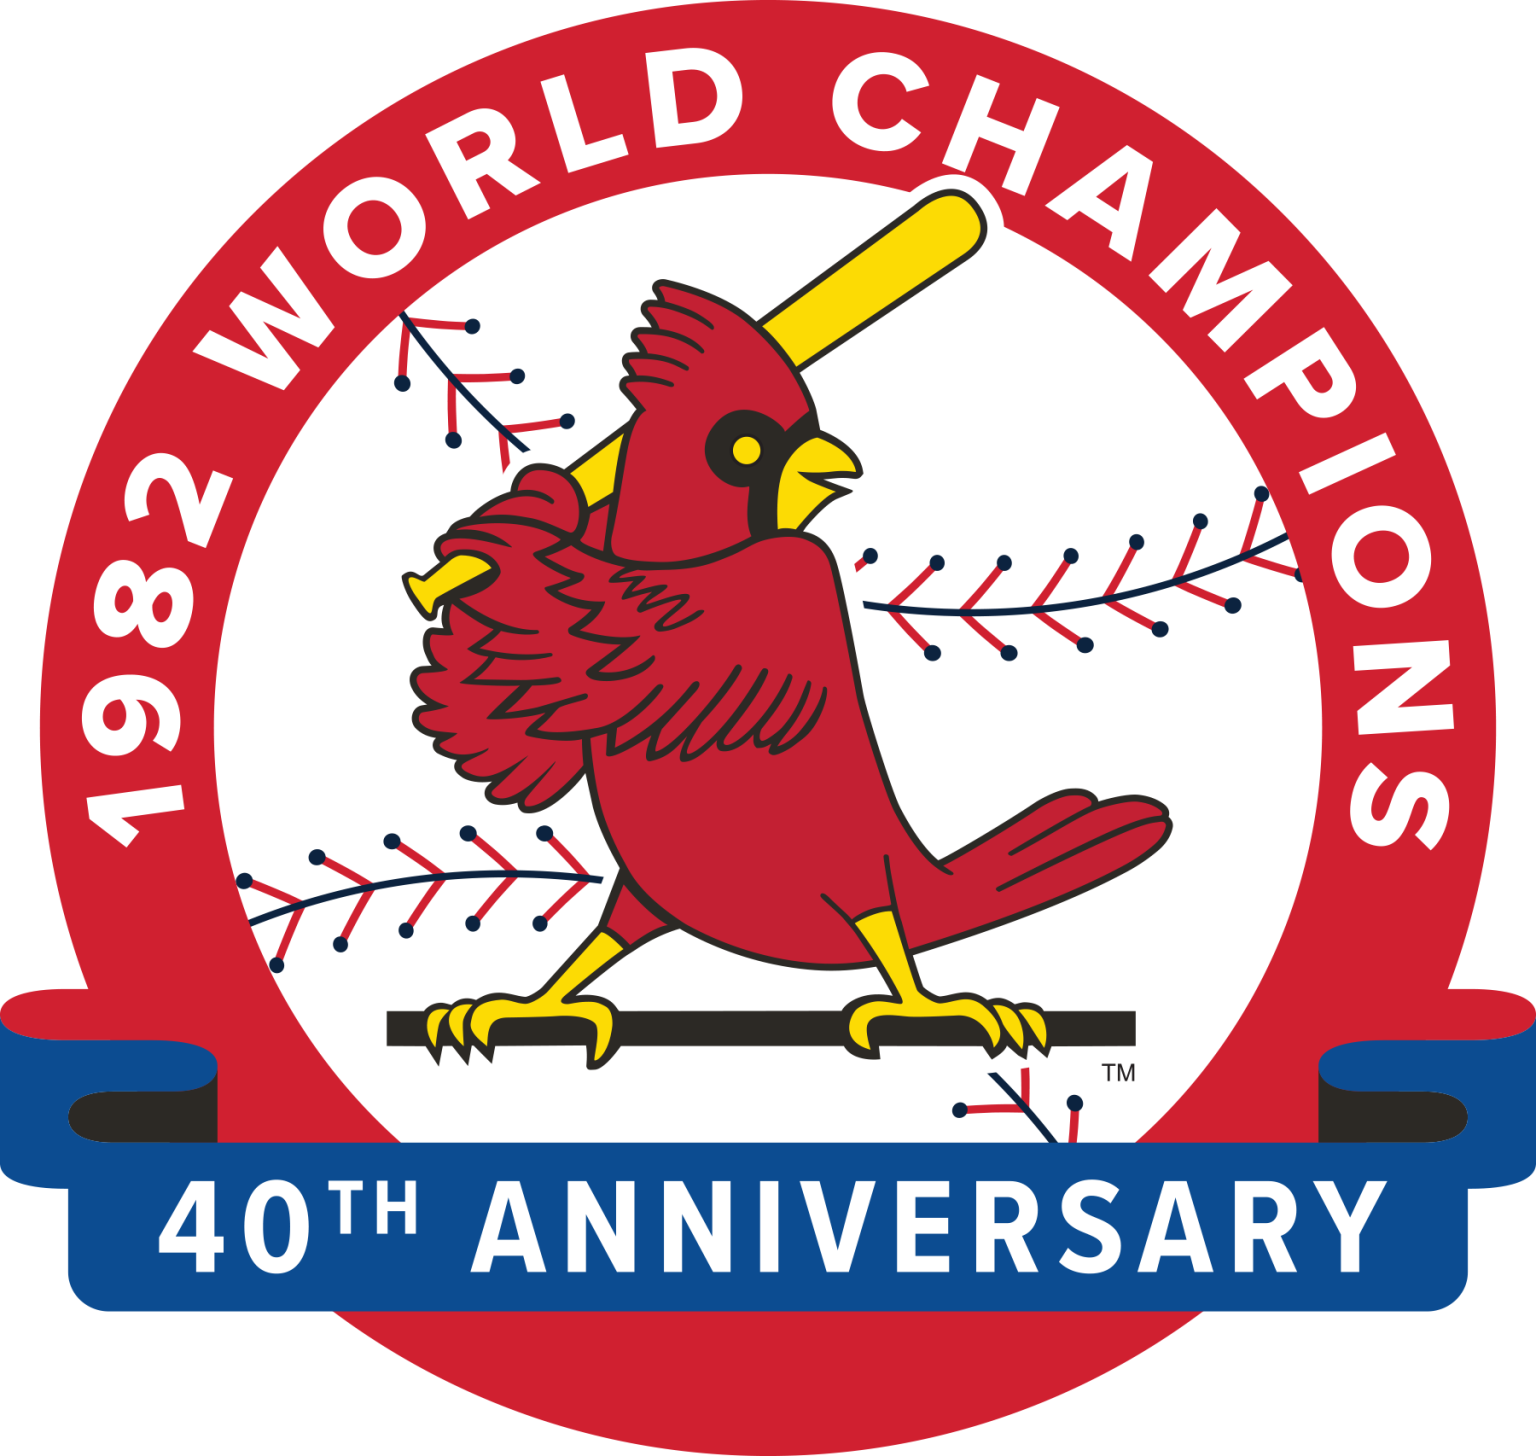 Remembering Cardinals' 1982 World Series